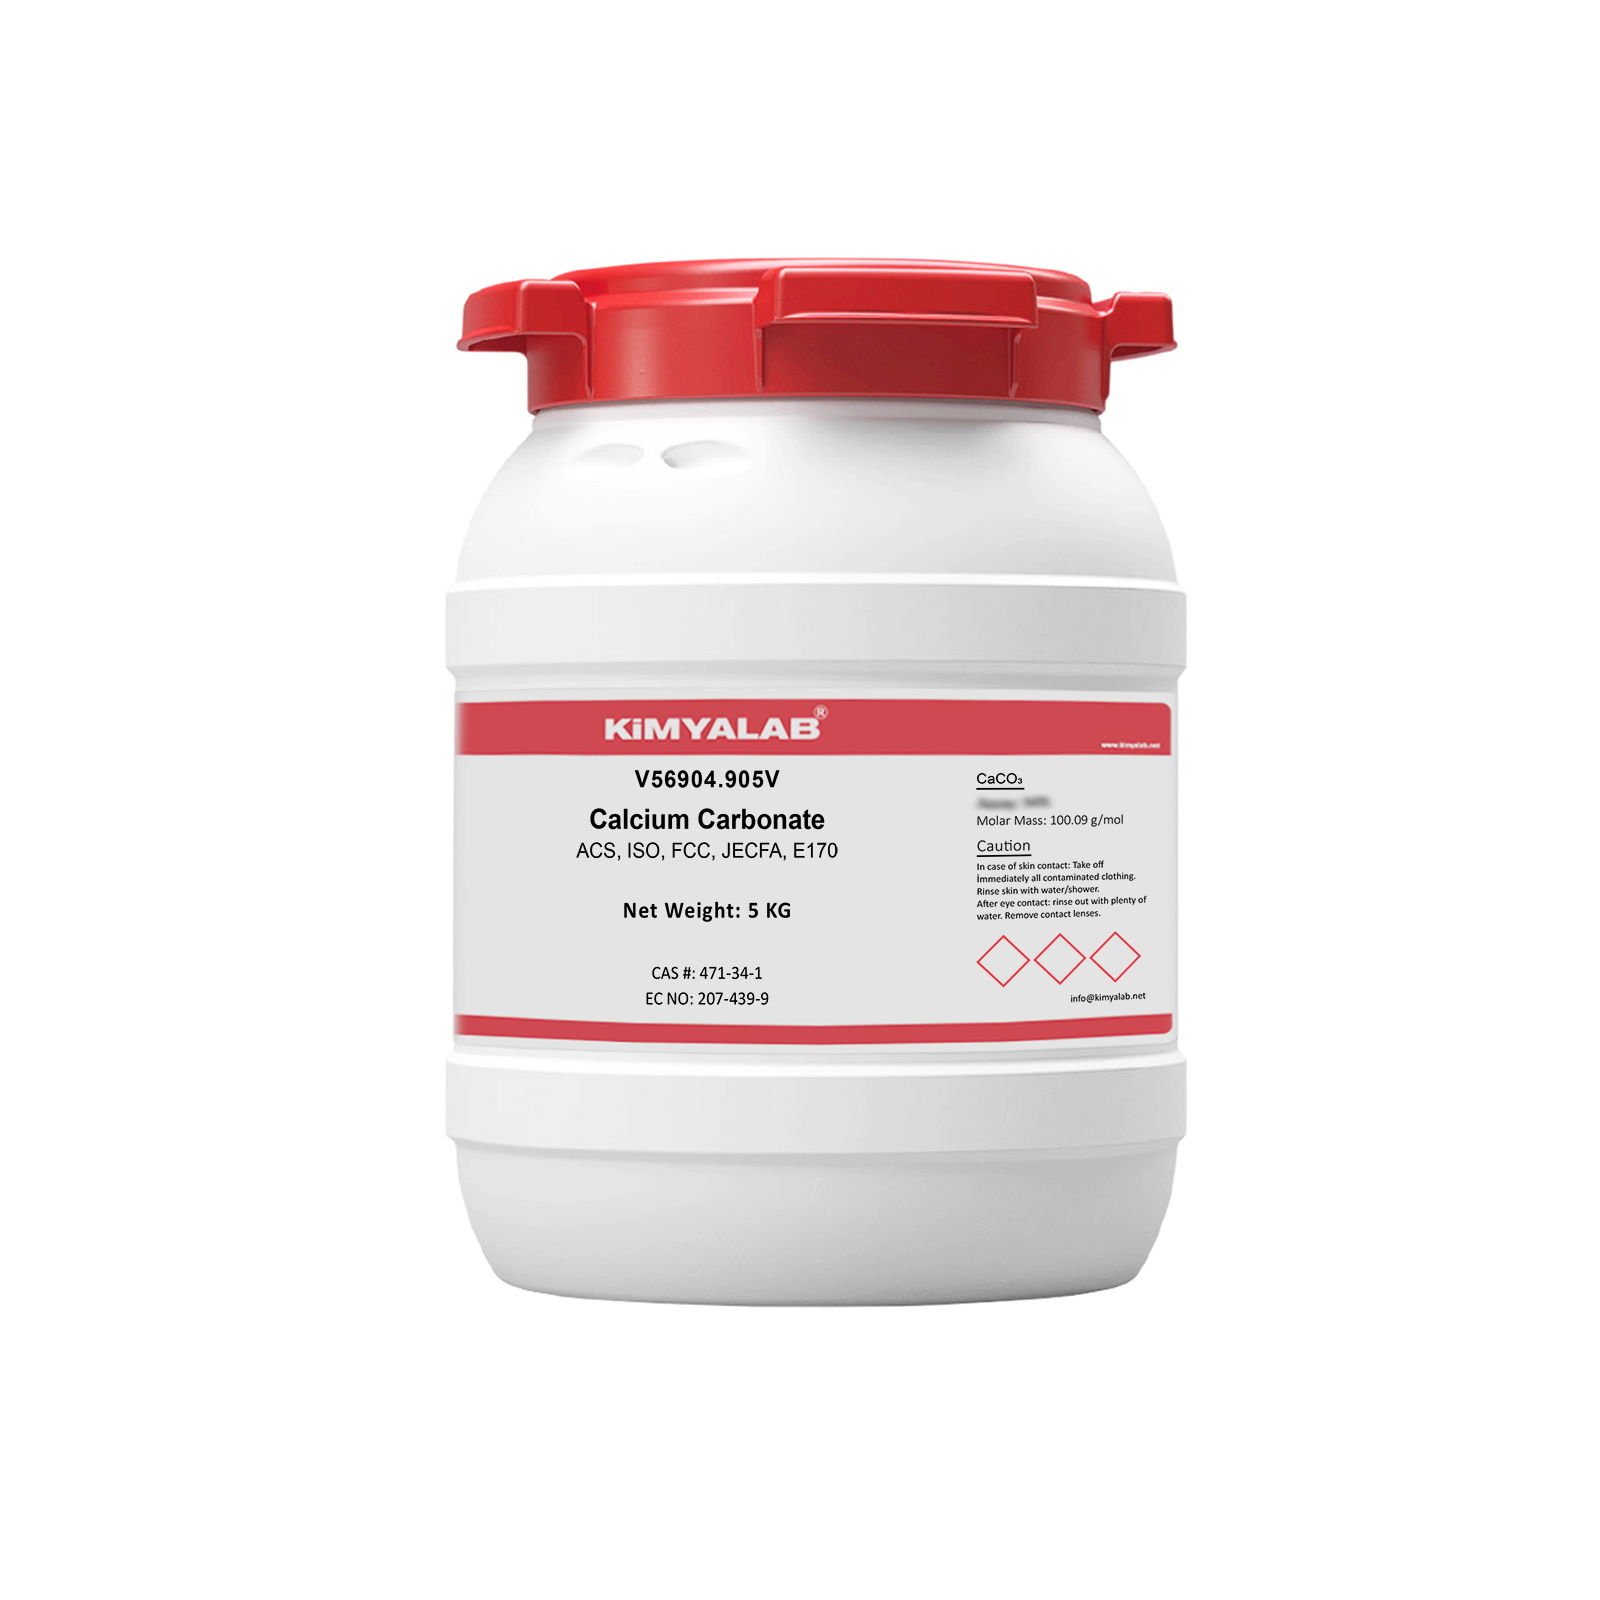 Kimyalab Kalsiyum Karbonat - Calcium Carbonate 5 Kg-HDPE Varil